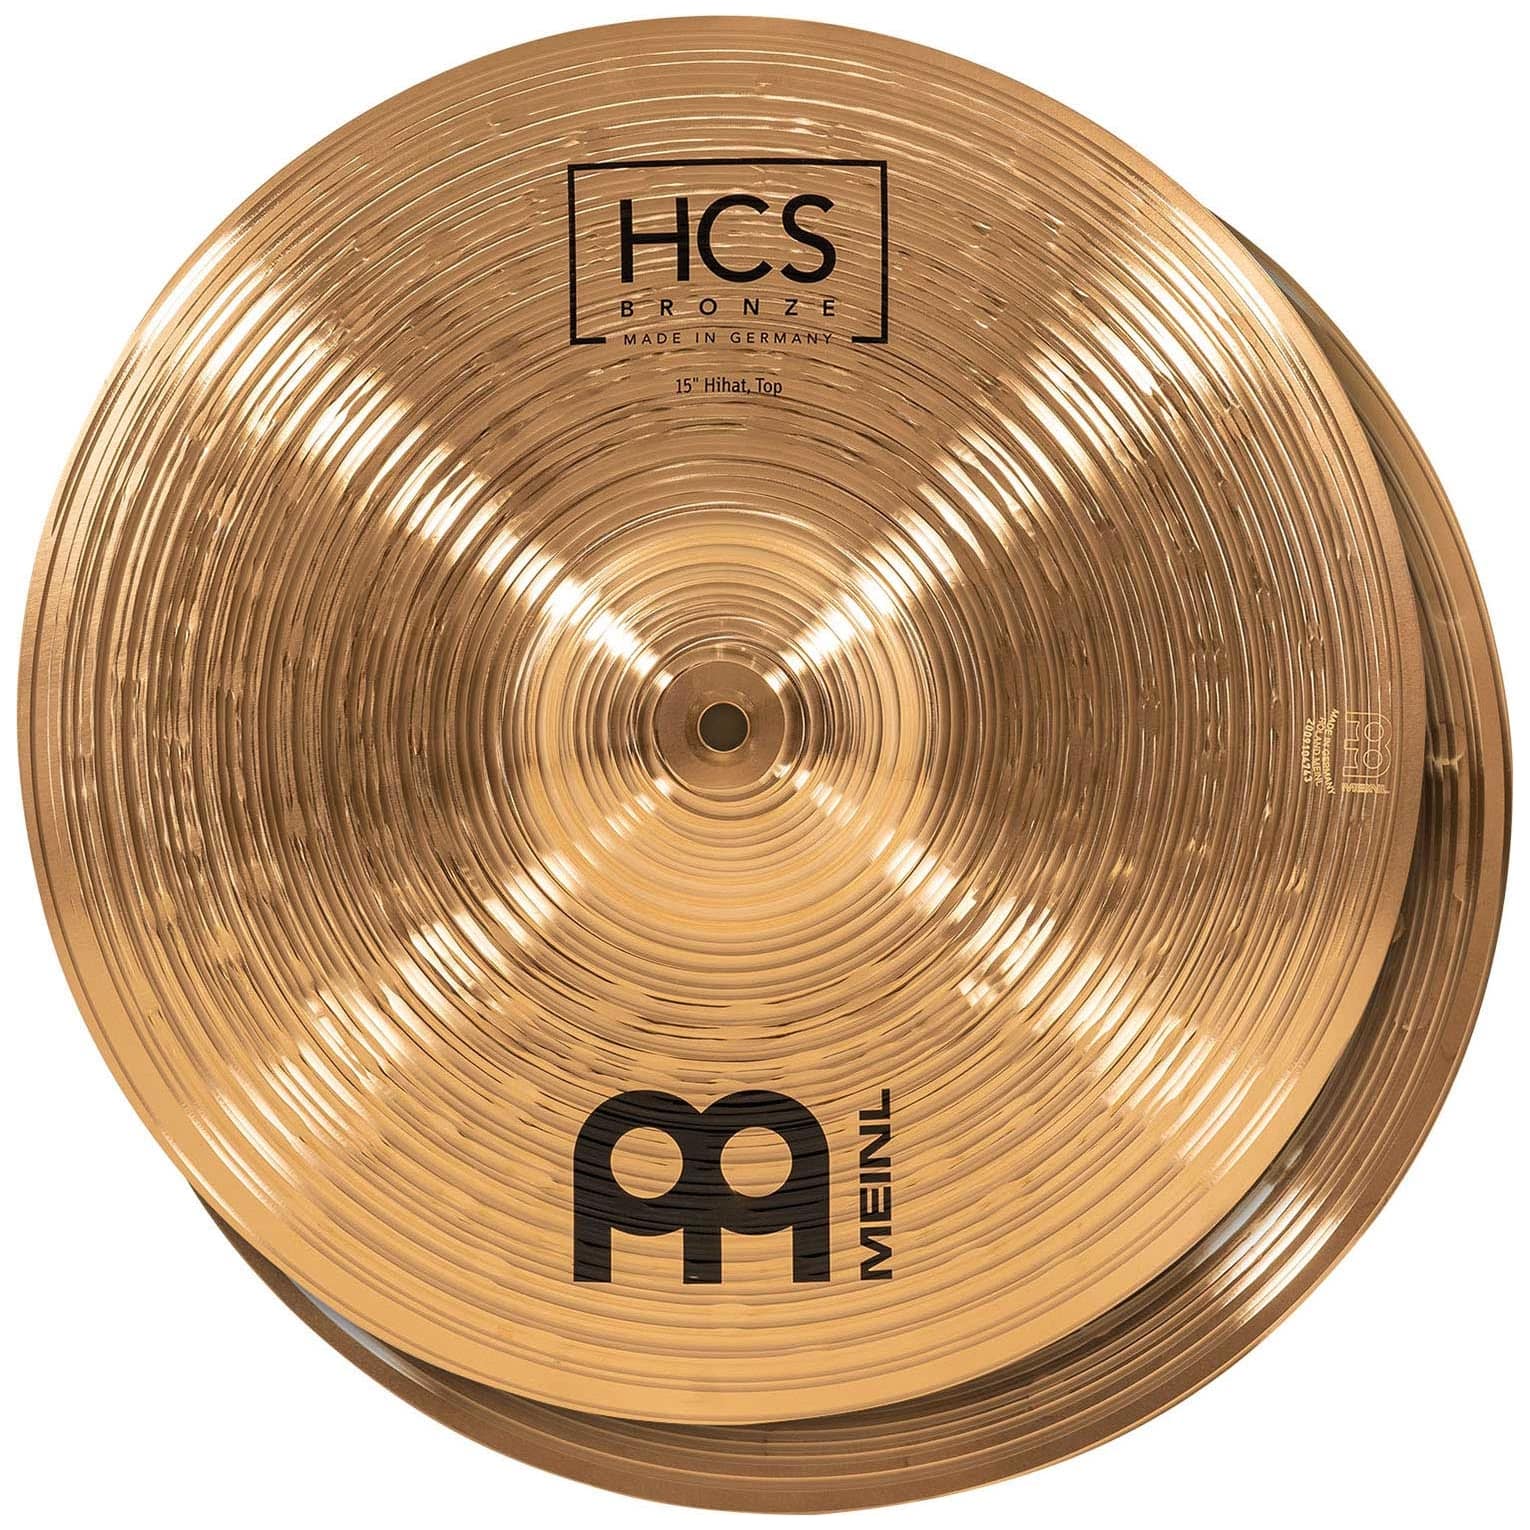 Meinl Cymbals HCSB15H - 15" HCS Bronze Hihat